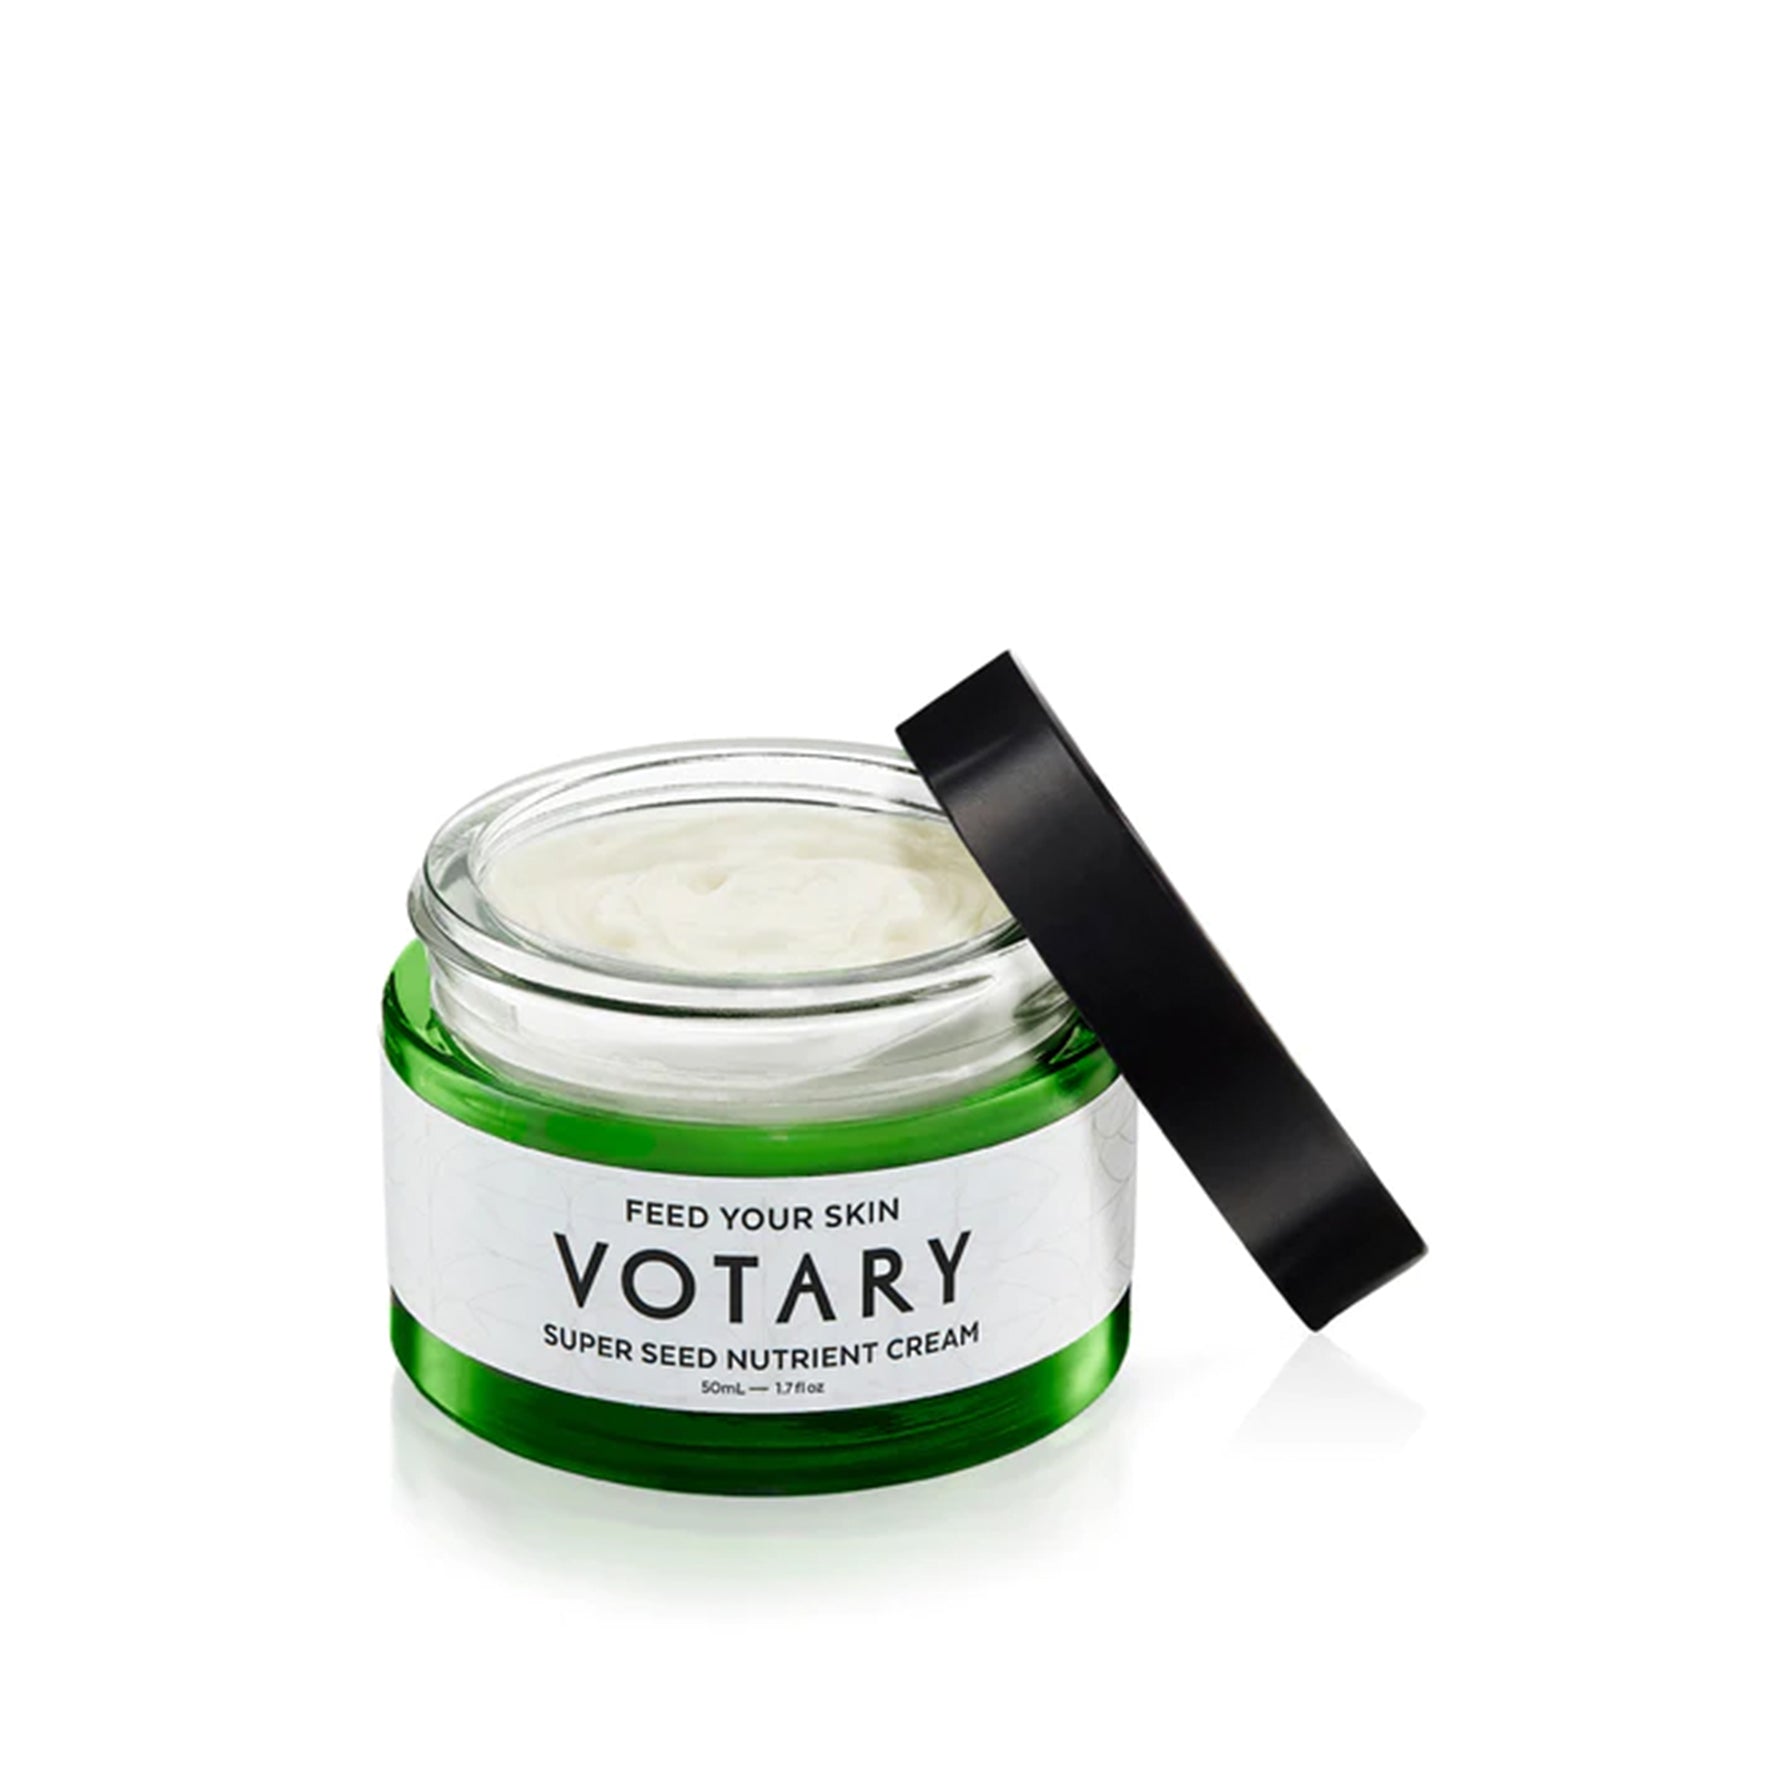 Votary - Super Seed Nutrient Cream